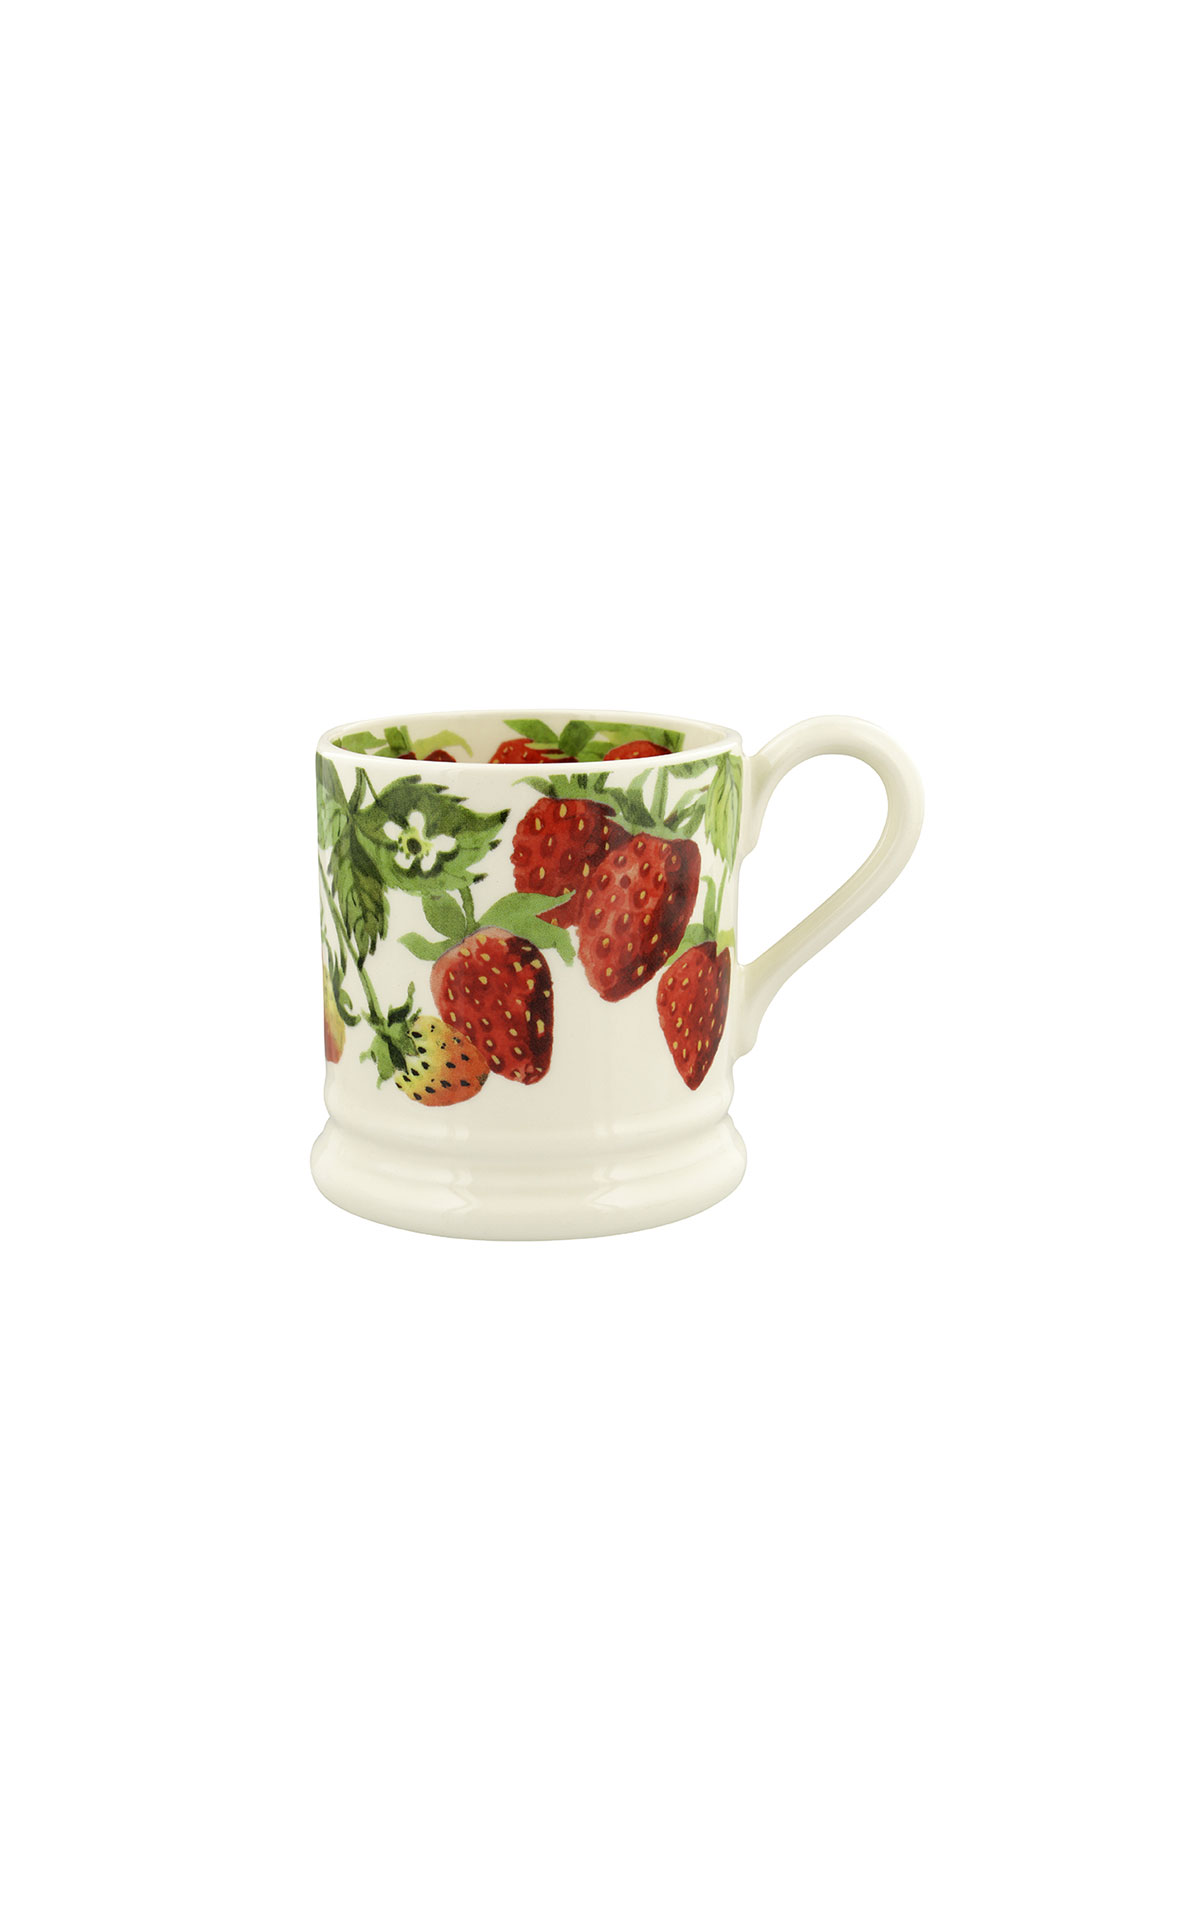 Emma Bridgewater Strawberries half pint mug from Bicester Village